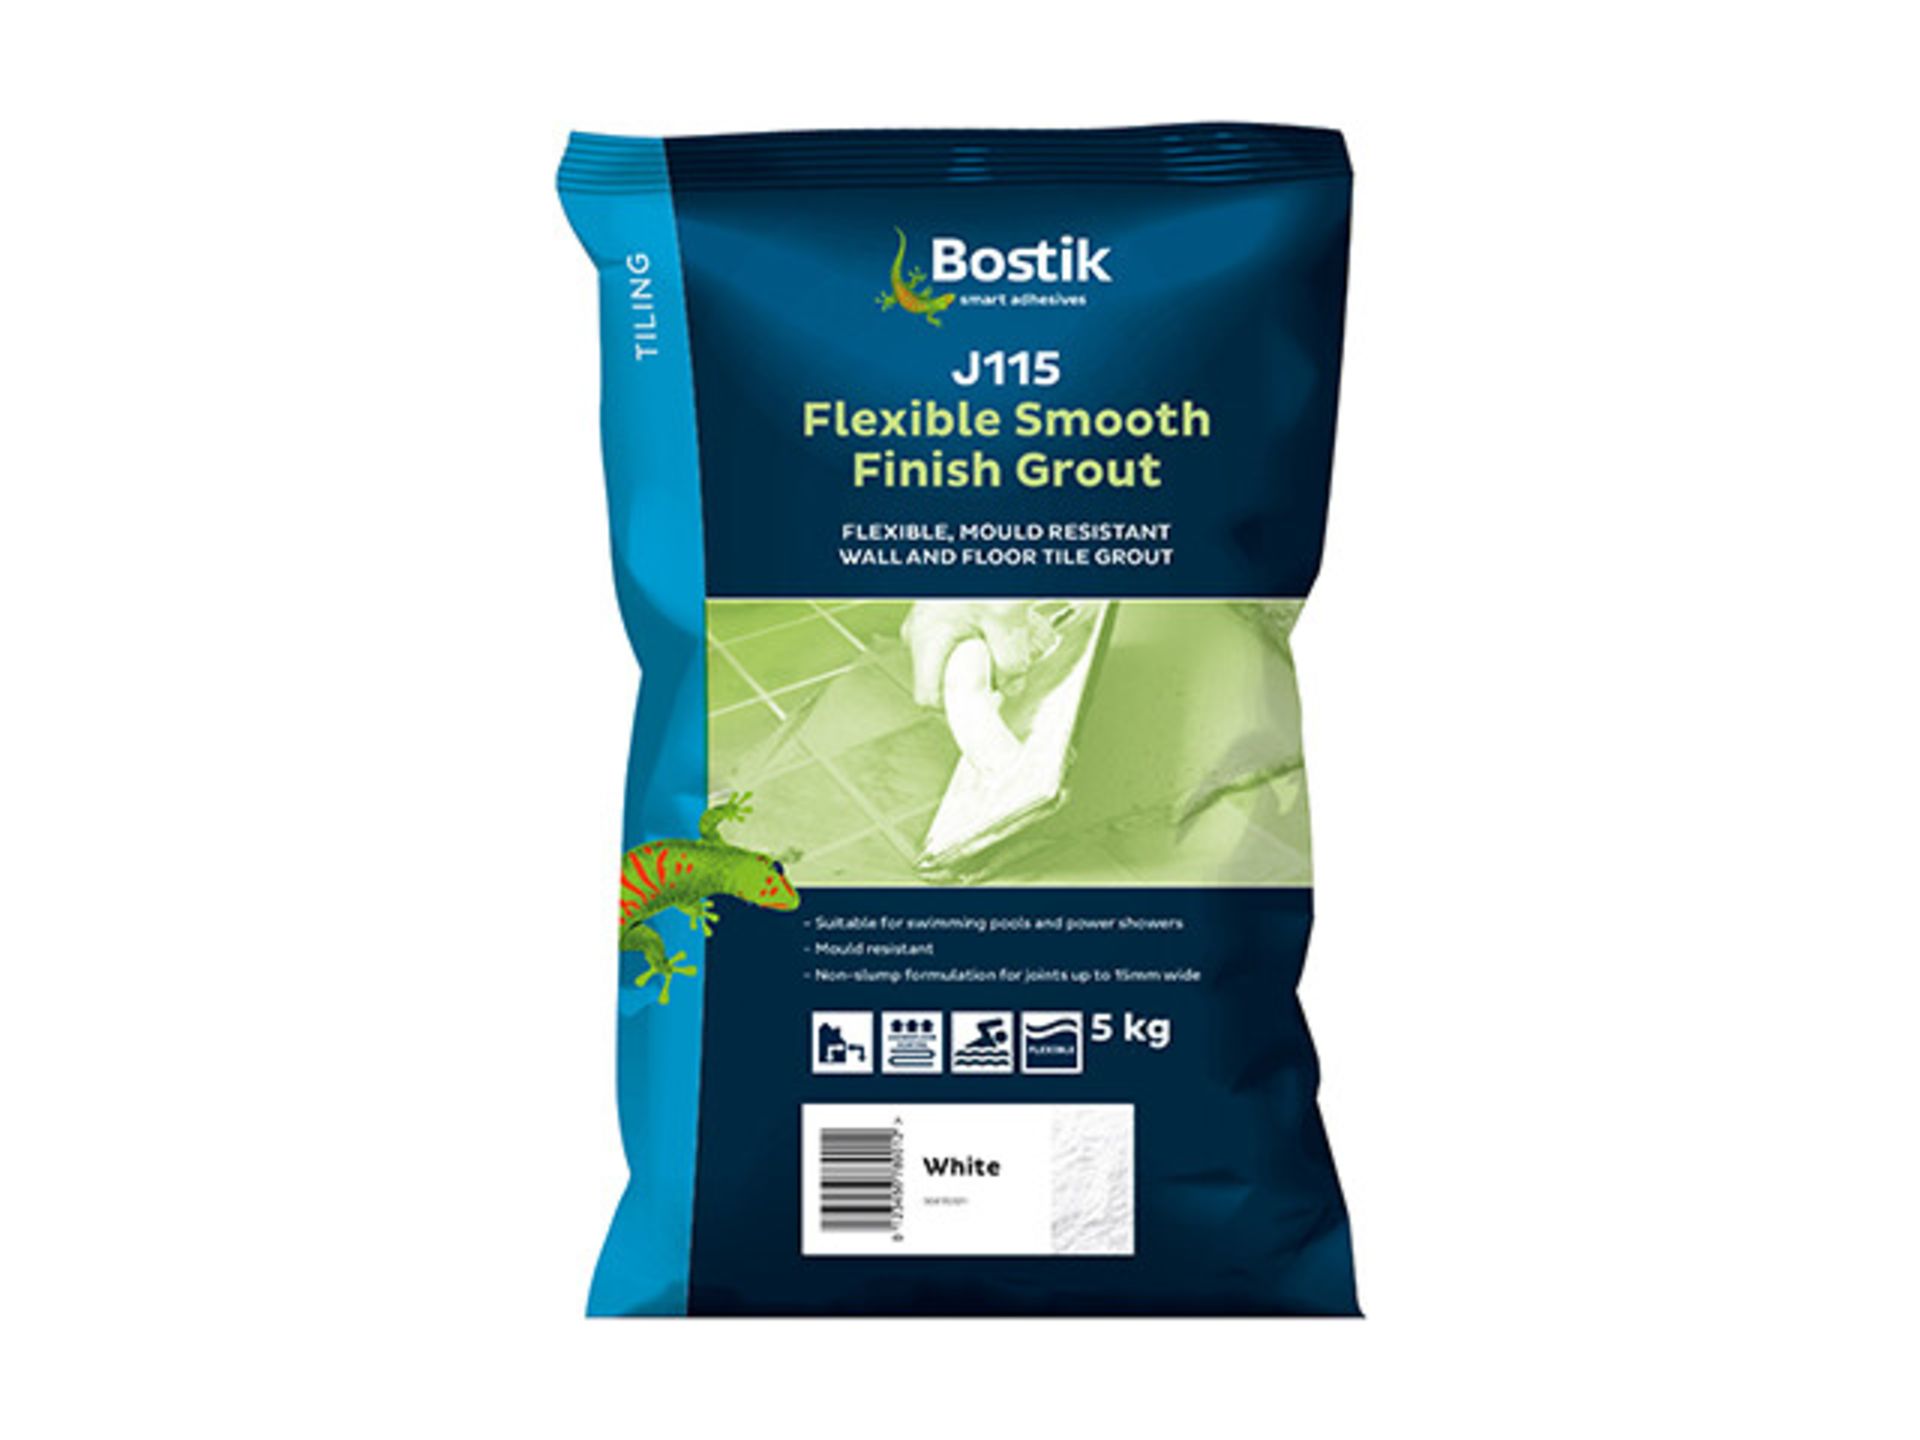 10x BRAND NEW BOSTIK J115 Flexible Smooth Finish Grout. BROWN. RRP £16.99 EACH. (R6-8). Bostik